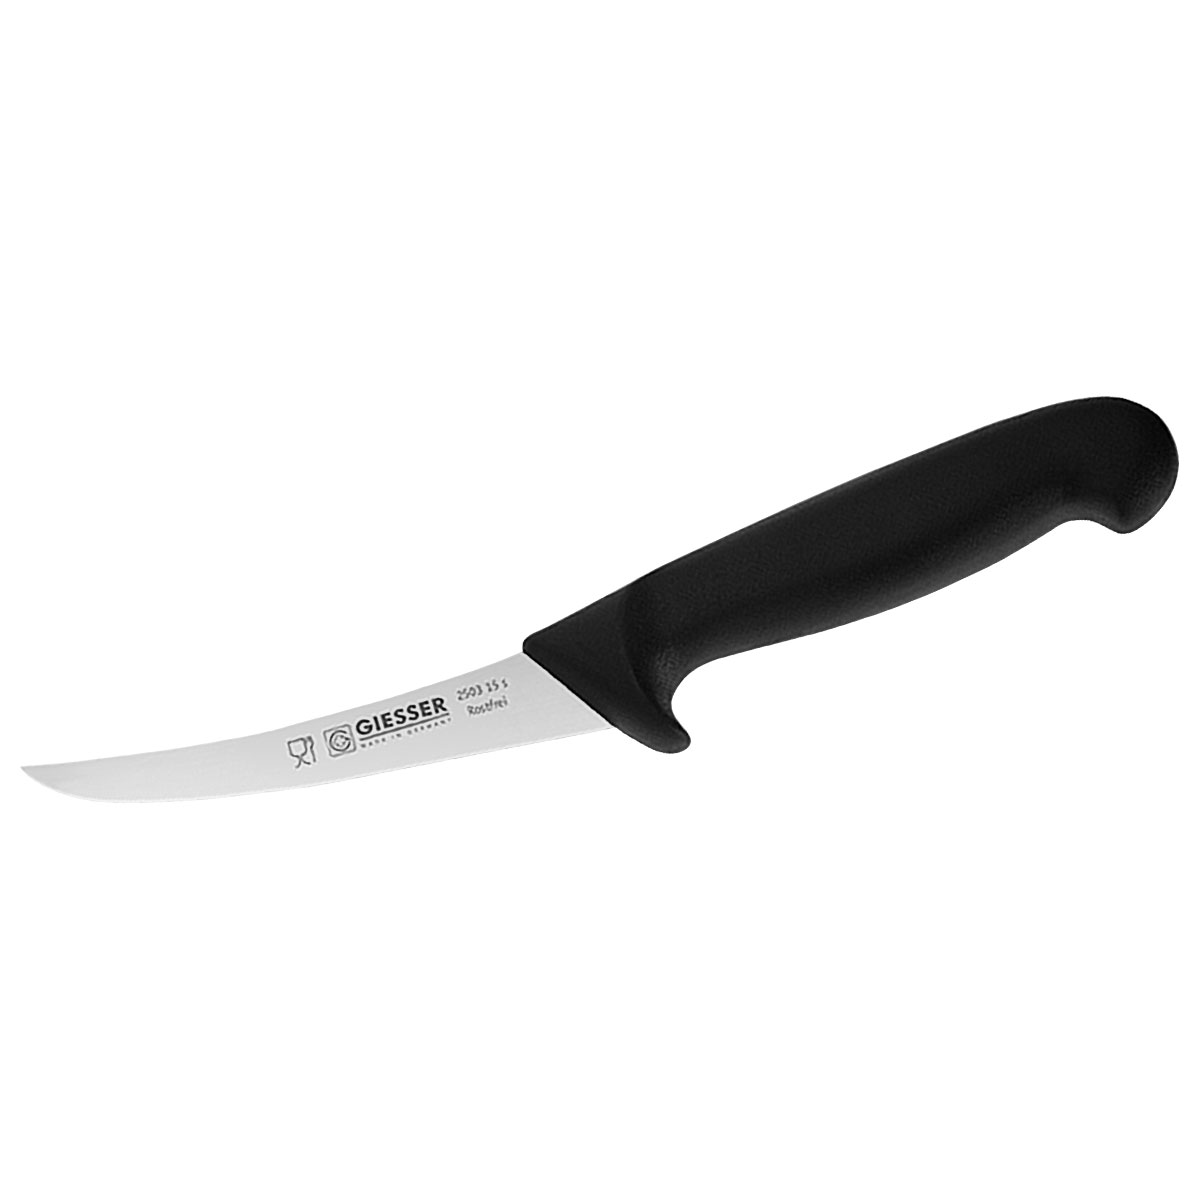 Giesser Boning Knife, 13cm (5) - Curved, Semi-Flex, Scandic - Black